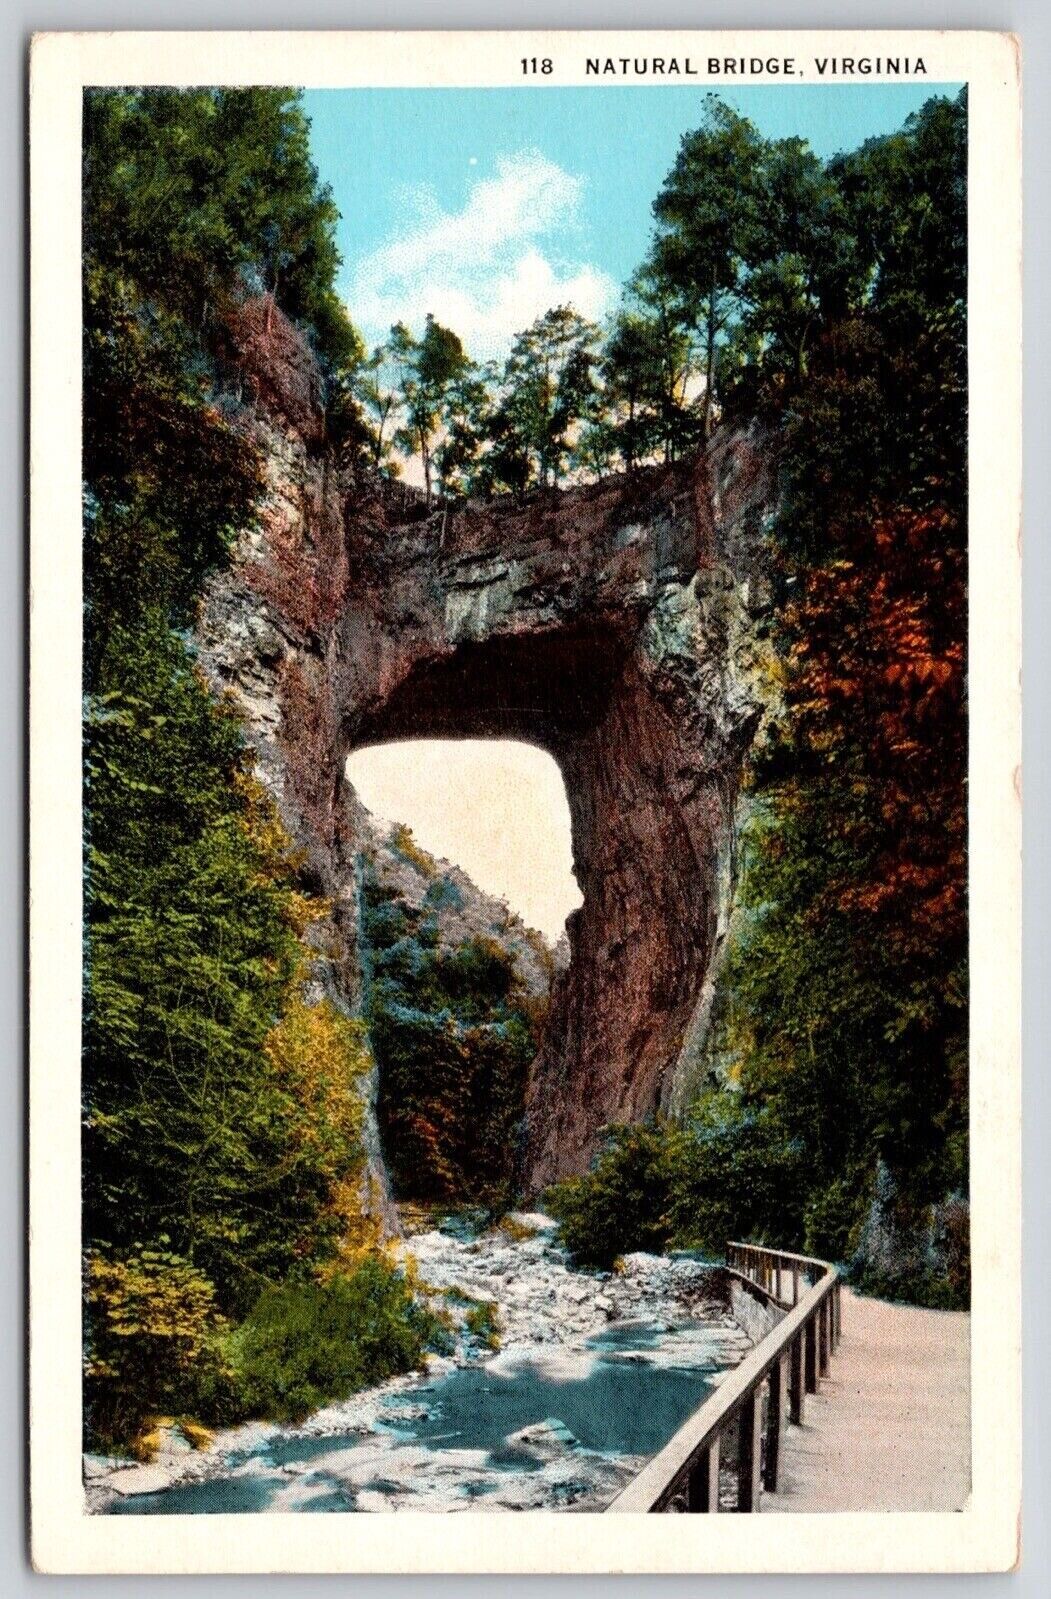 Natural Bridge Virginia River Rock Formation Historic Rockbridge County Postcard